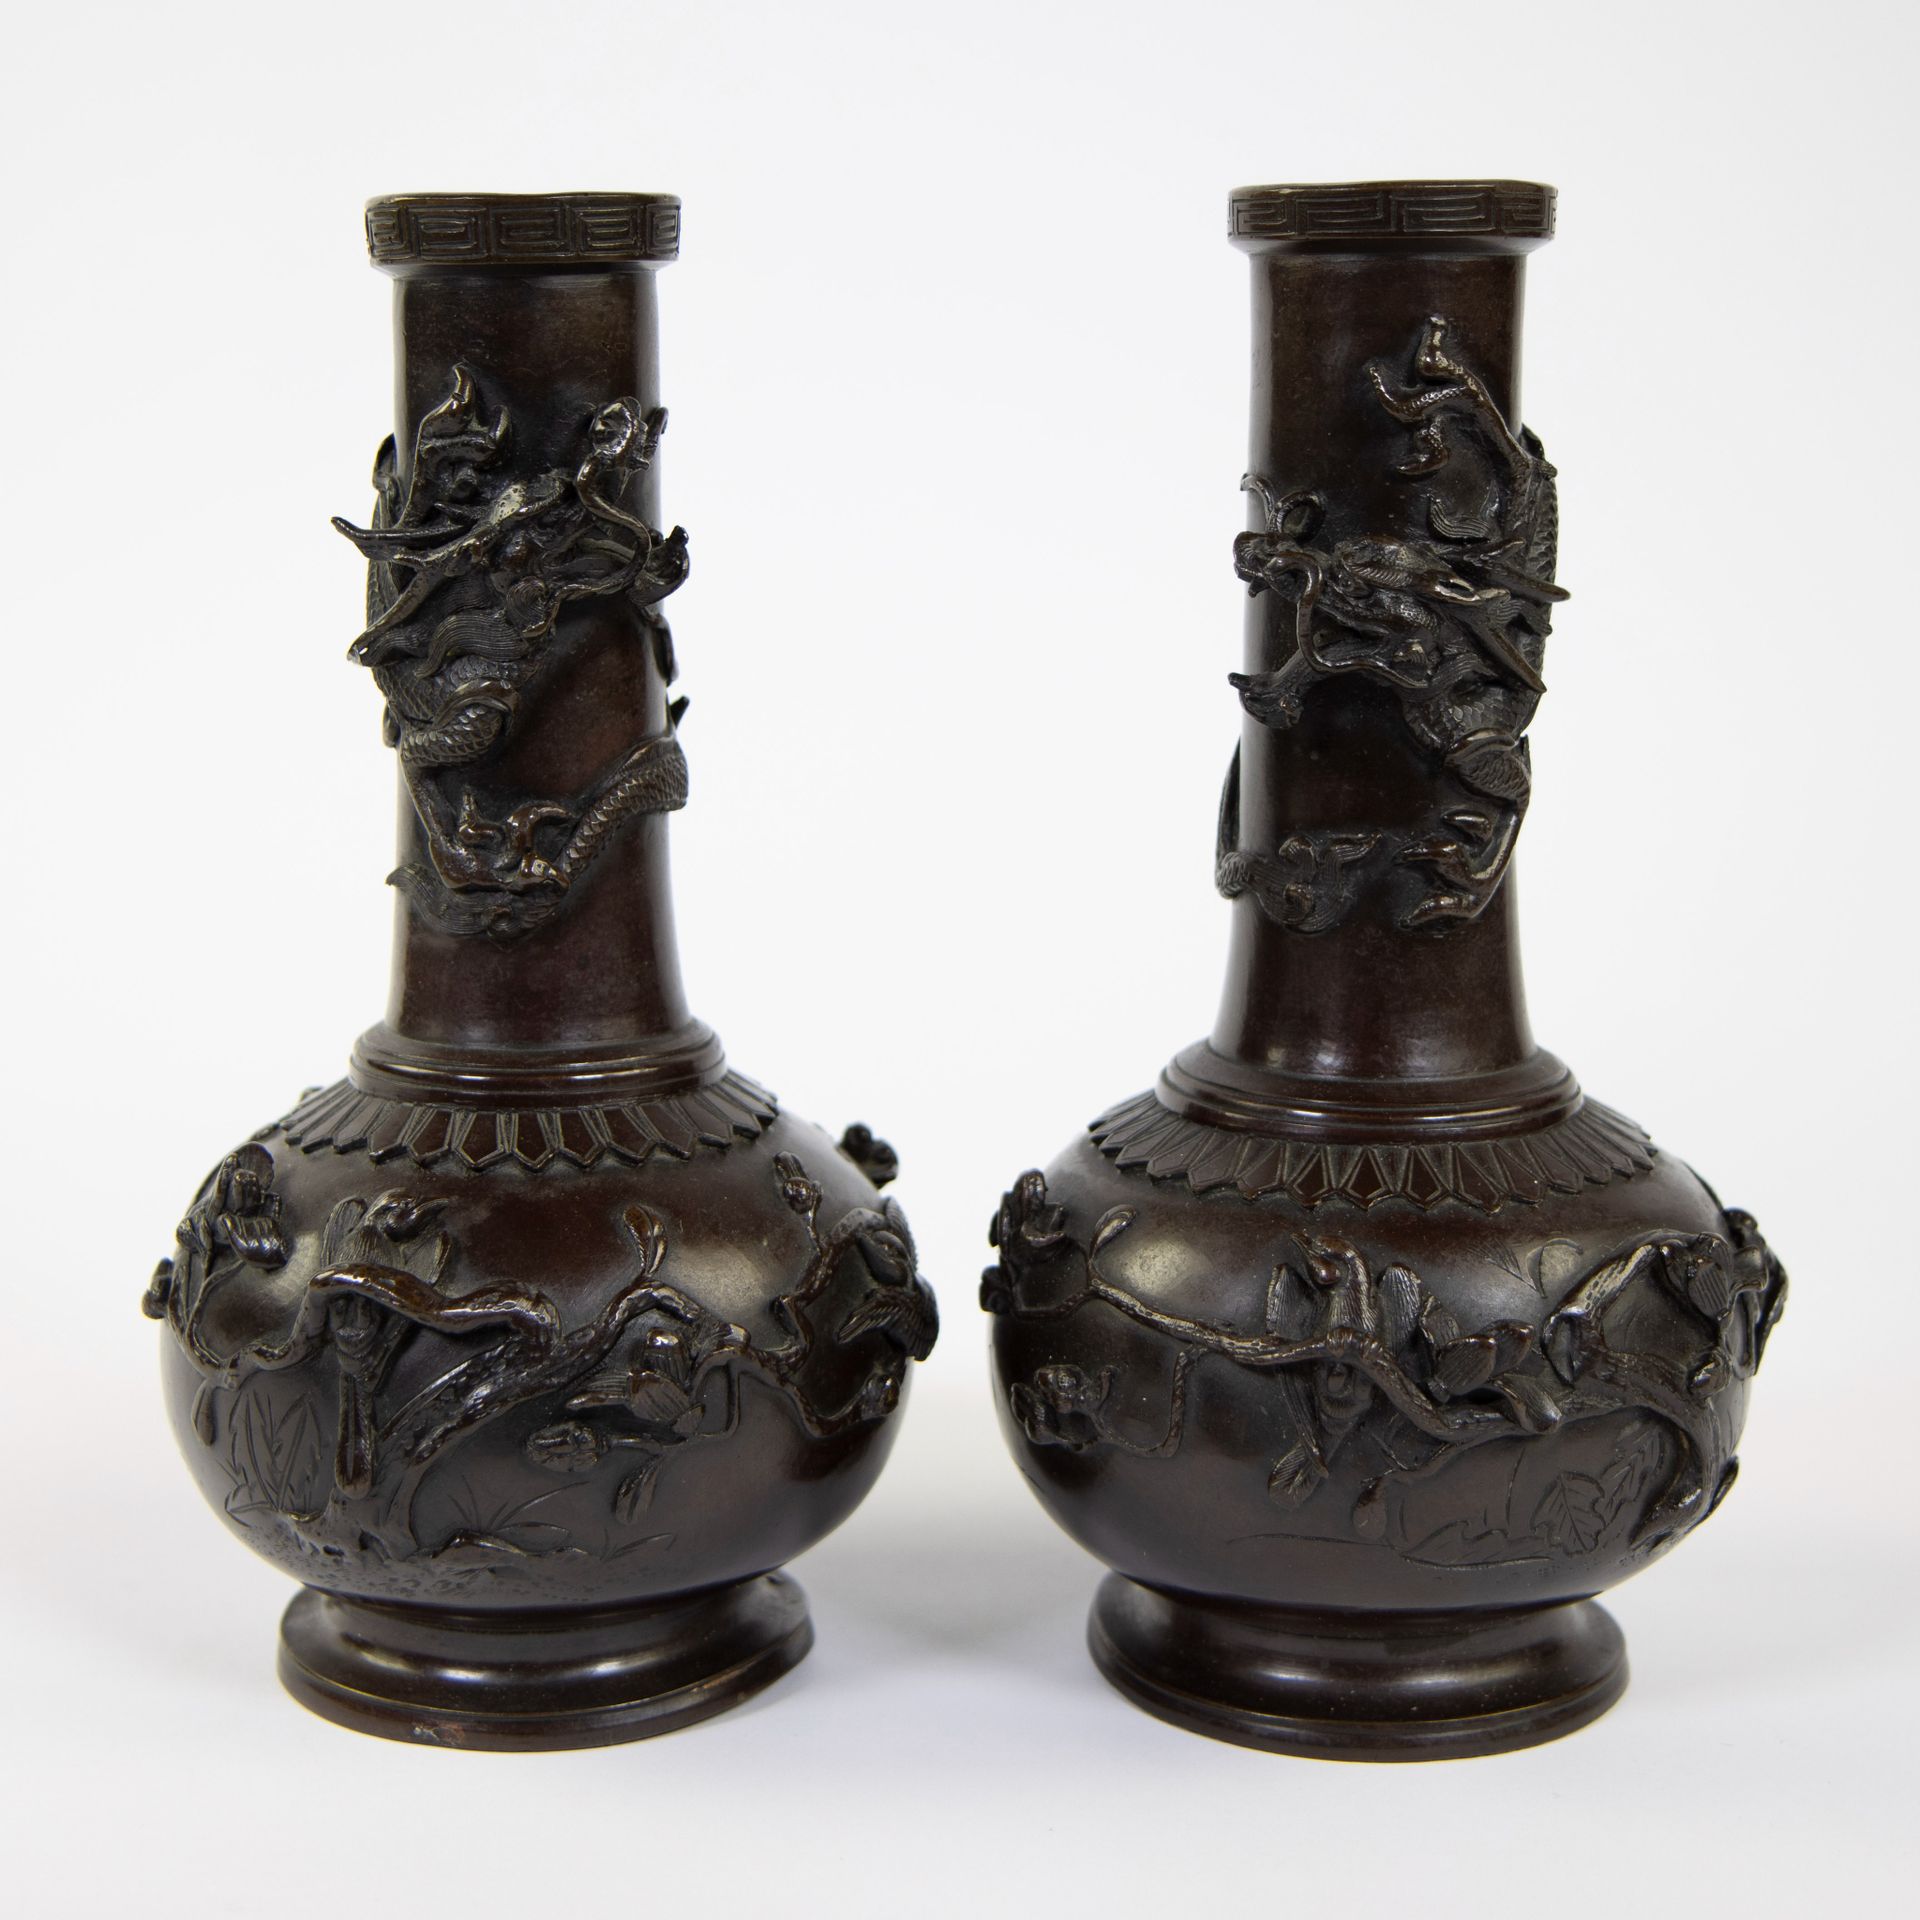 Japanese bronze vases